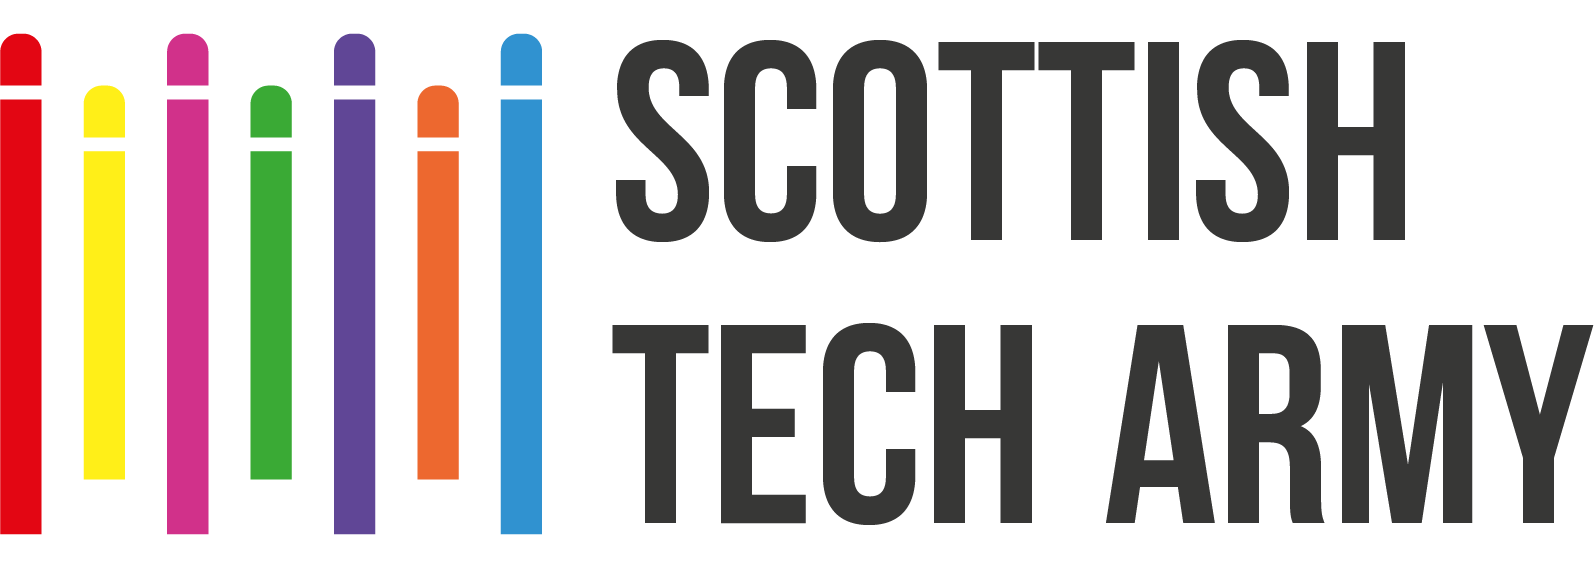 Scottish Tech Army logo